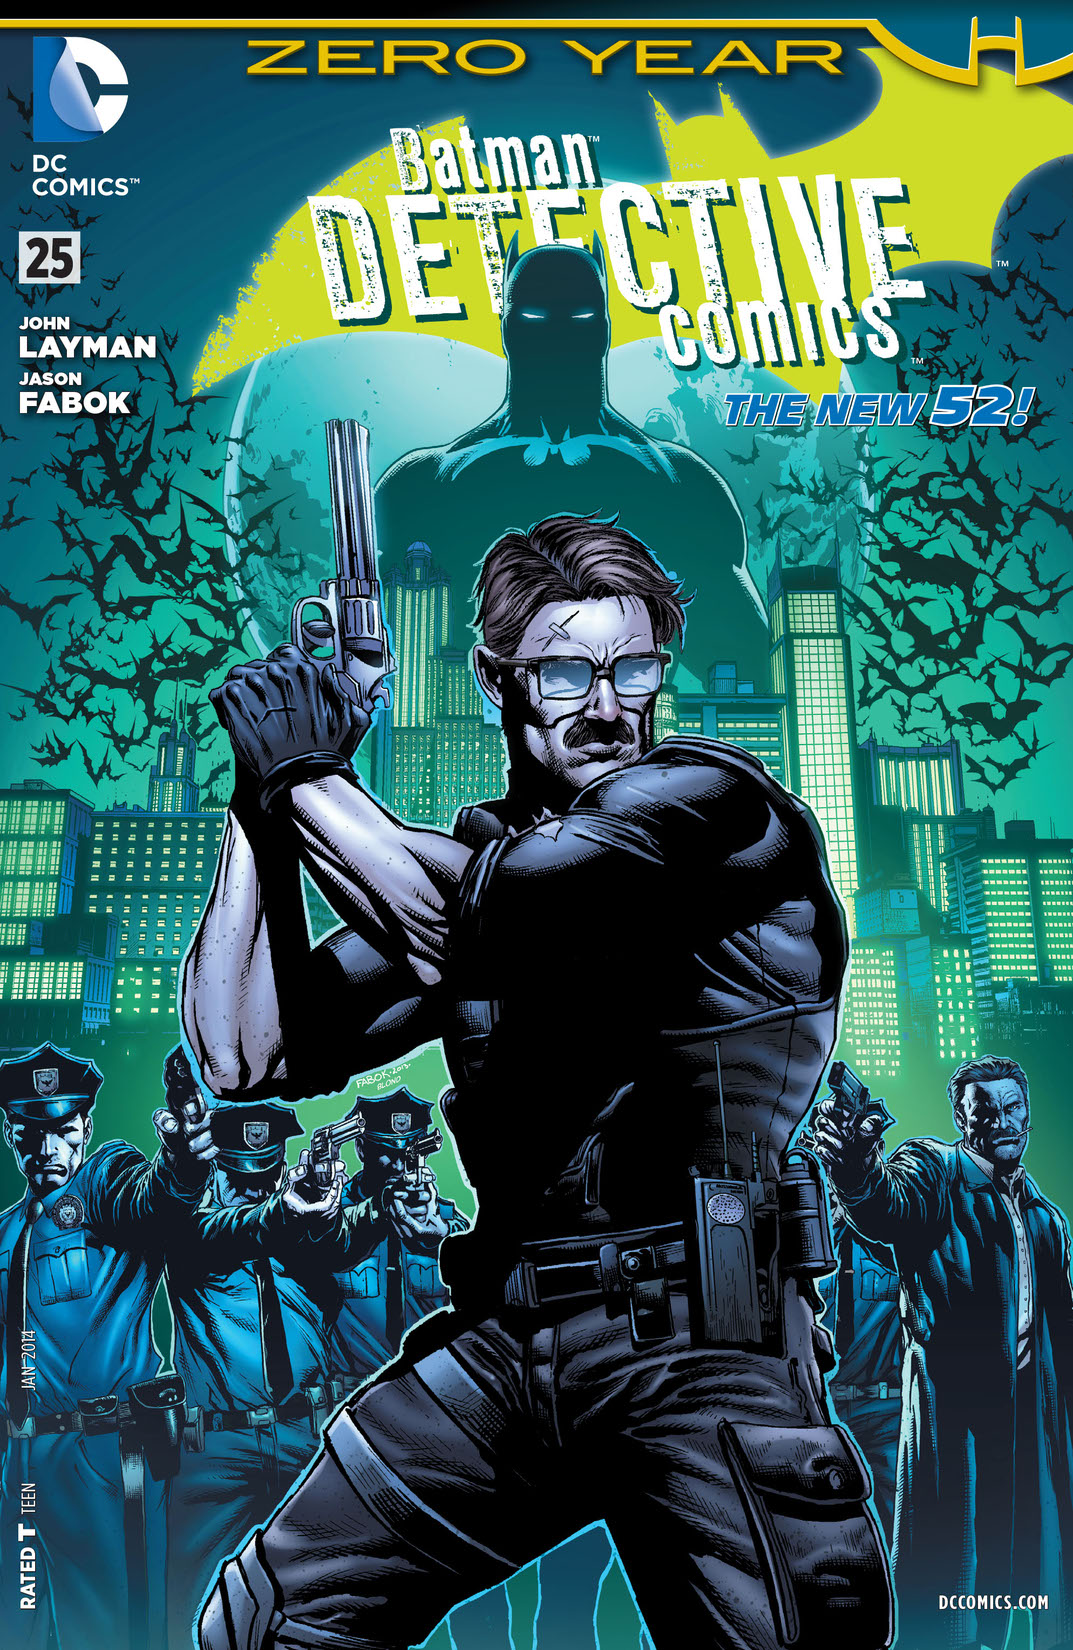 Detective Comics (2011-) #25 preview images